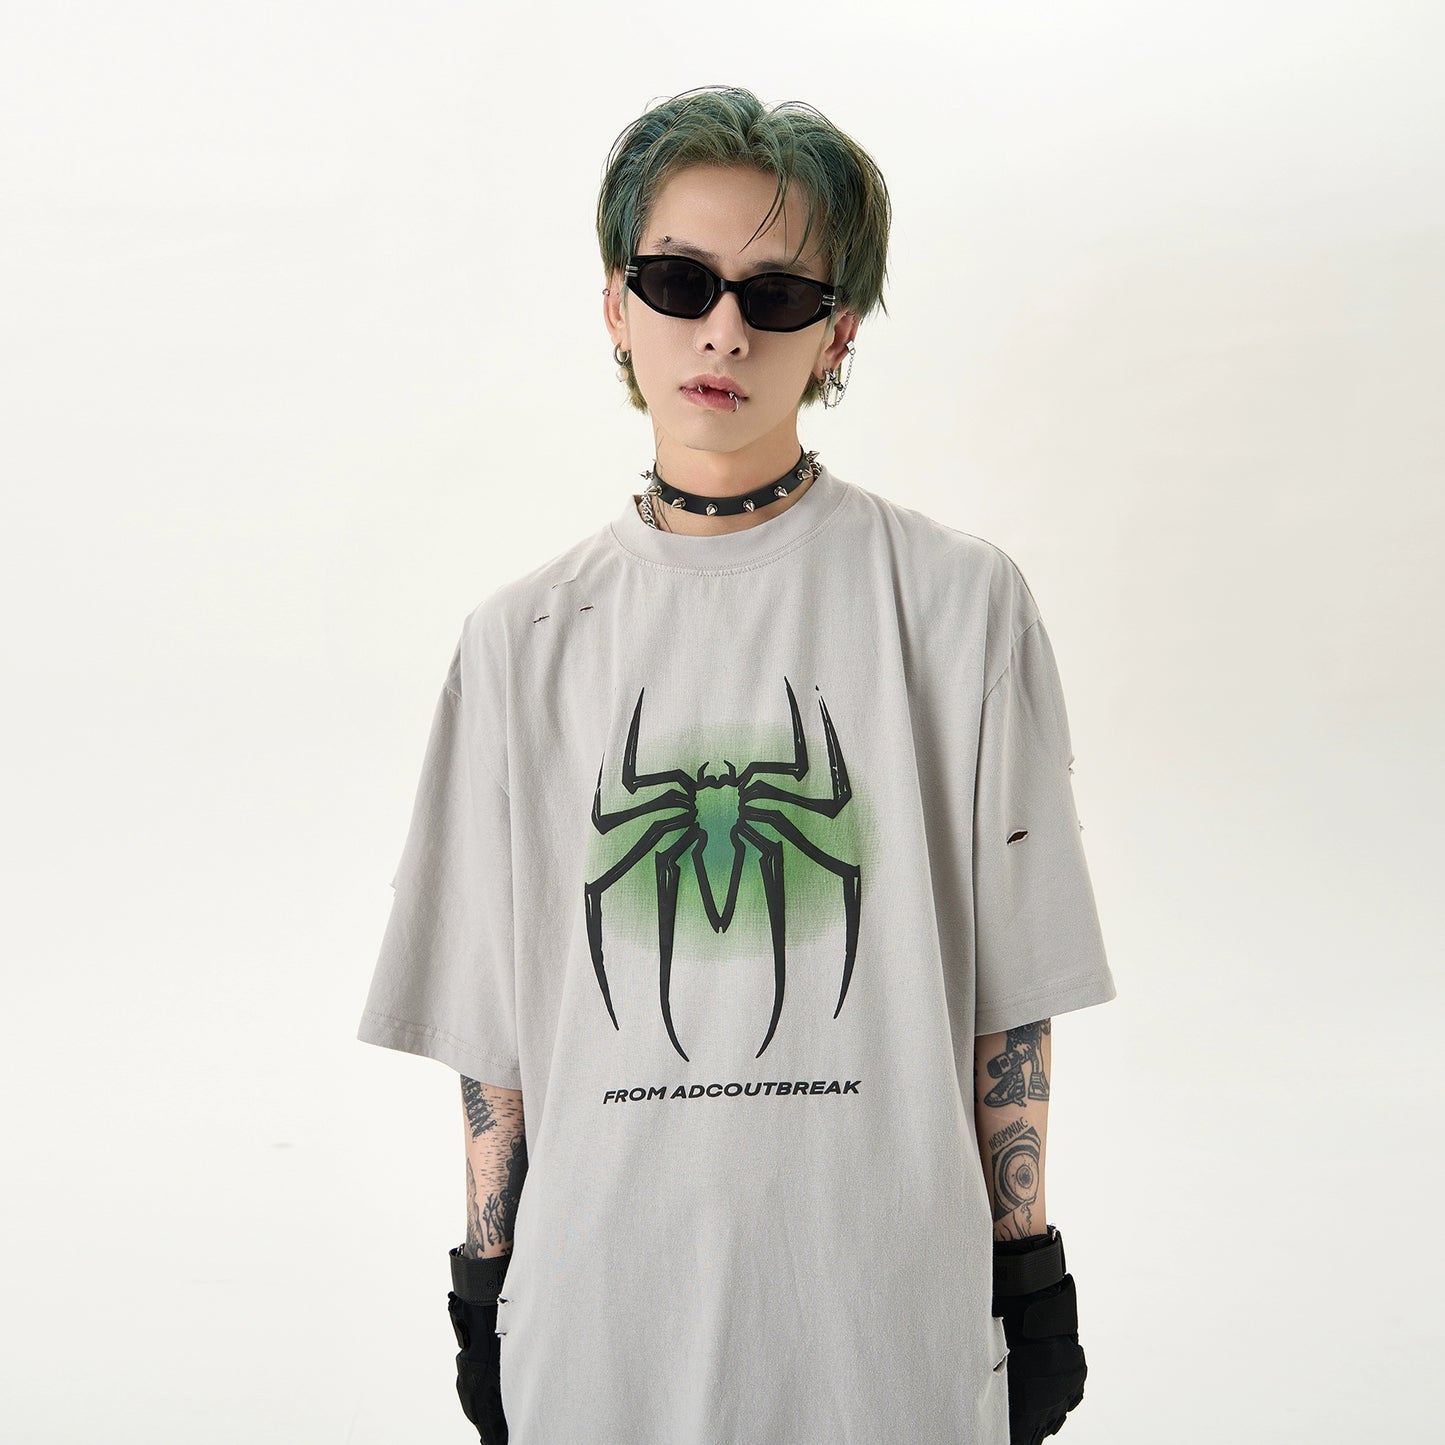 Spider Print Damage Short Sleeve T-Shirt WN5080